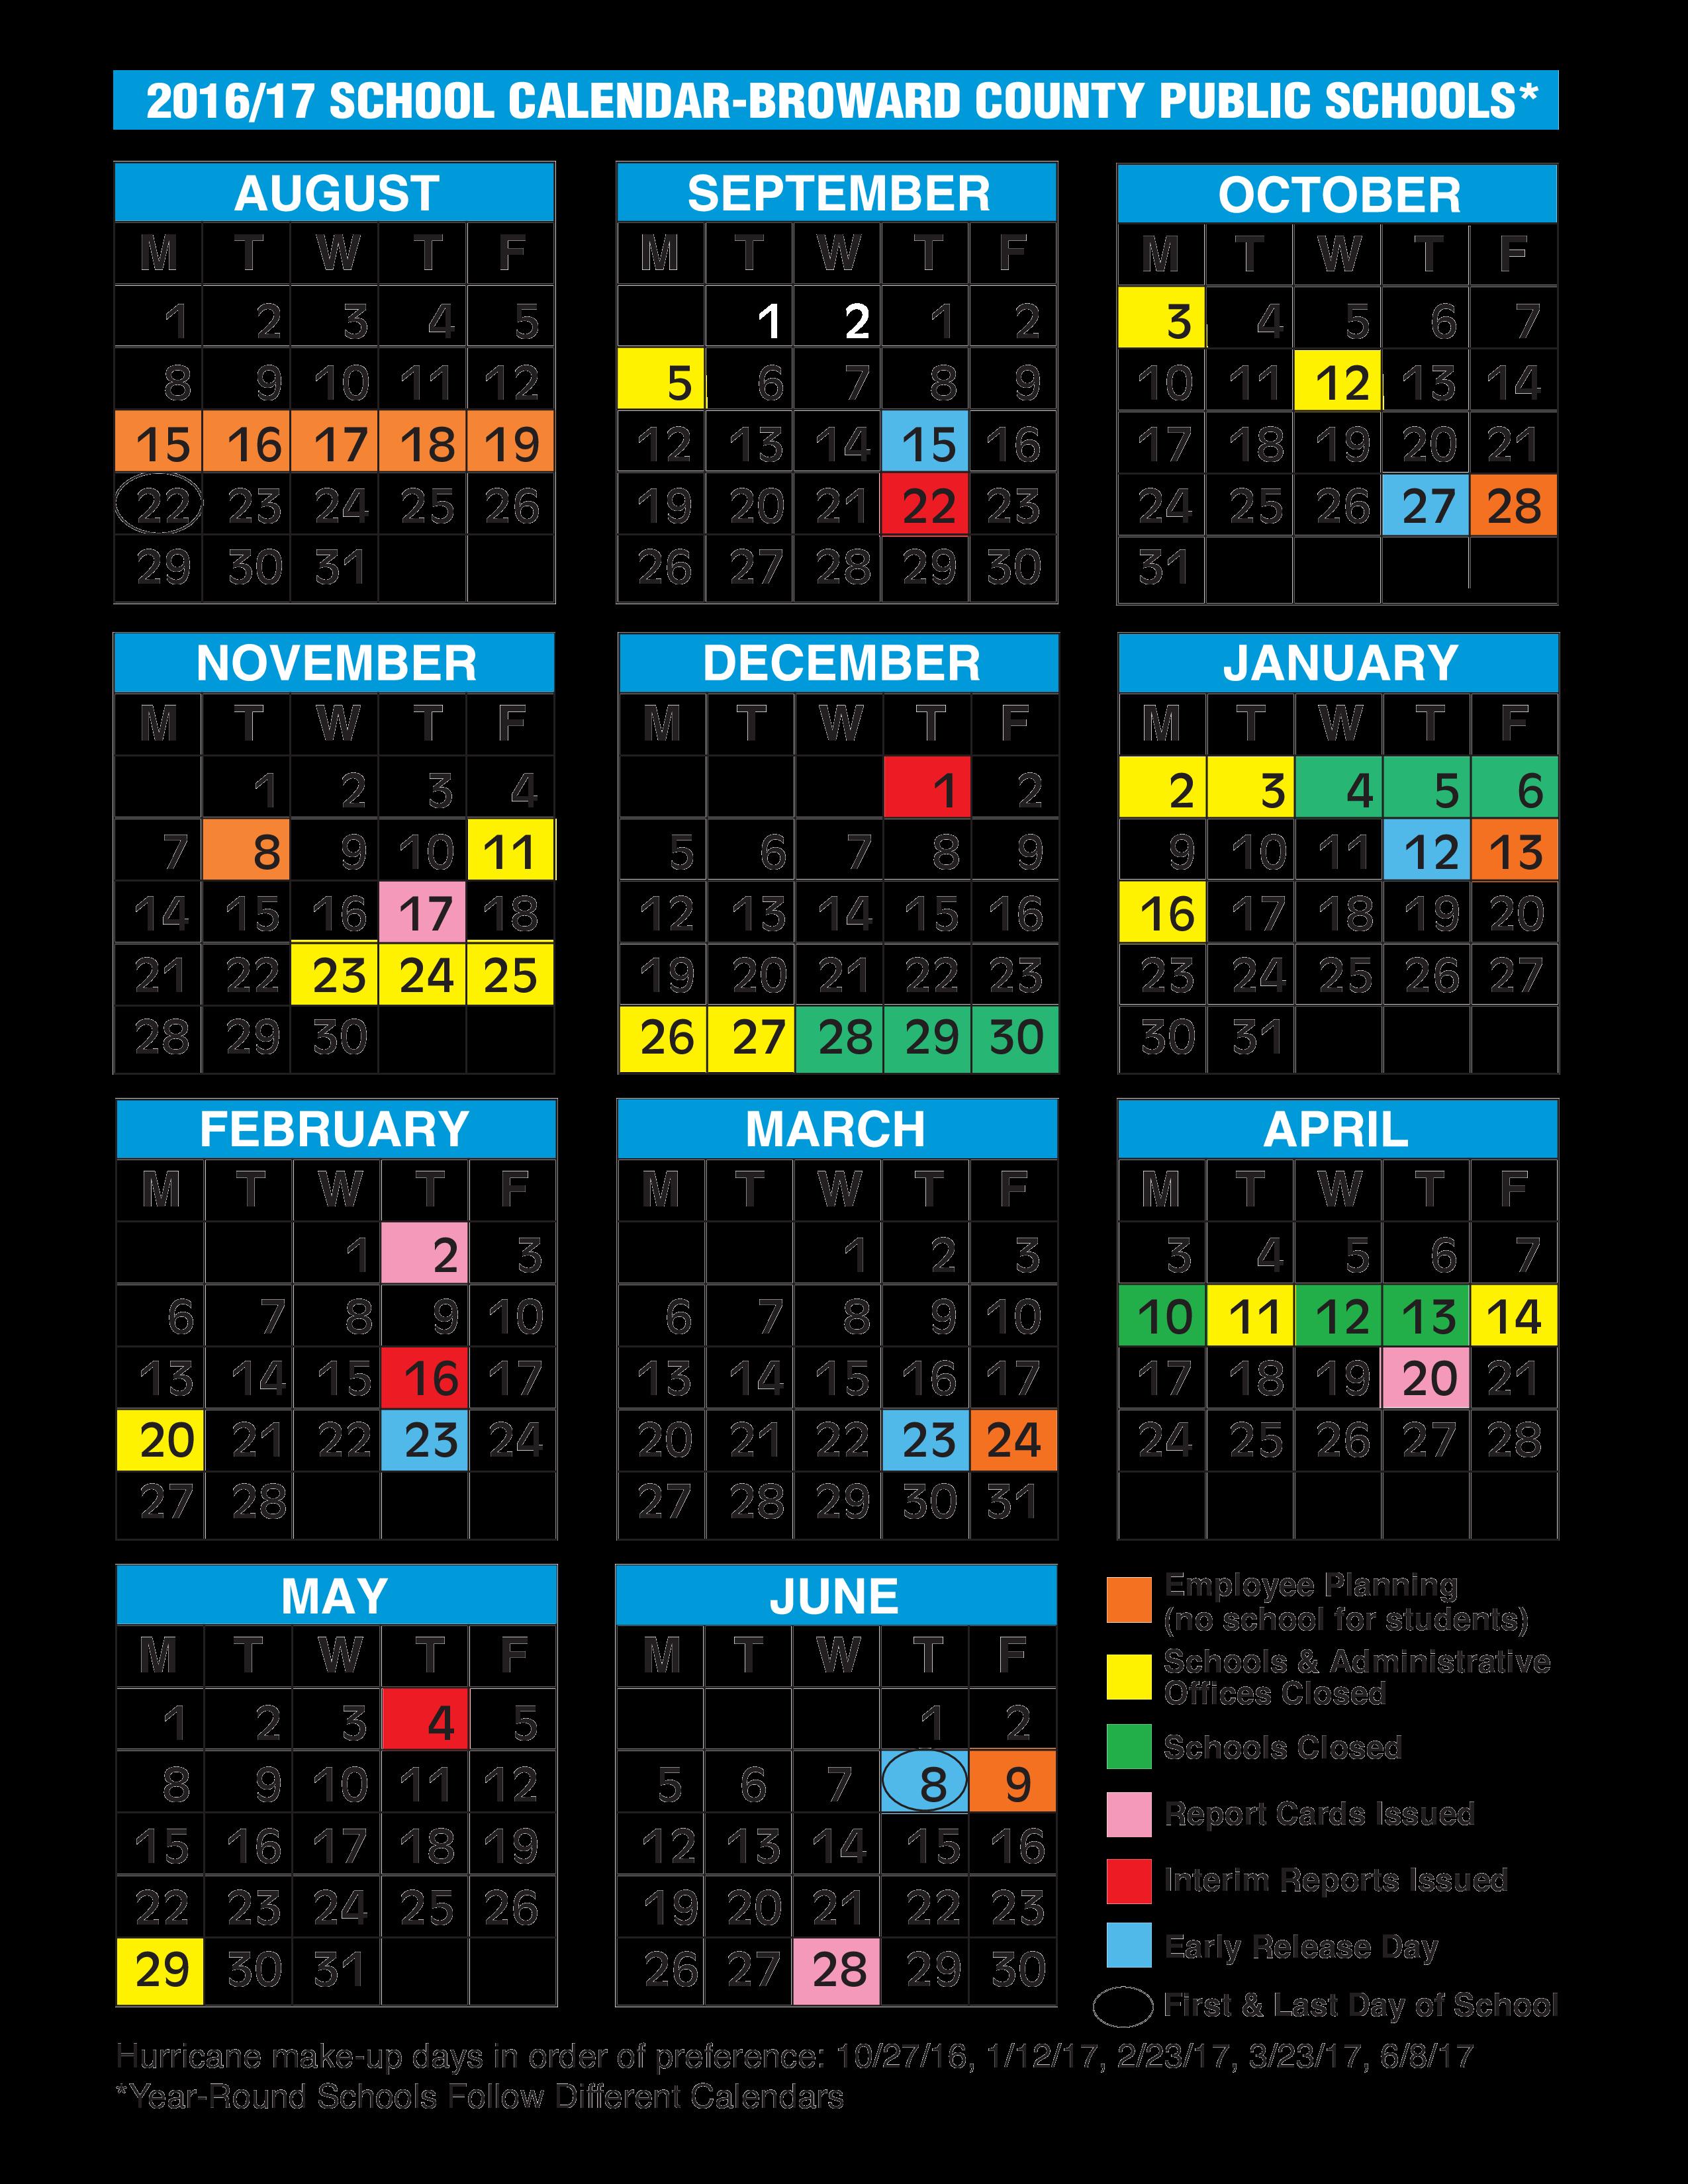 Daily School Calendar  Templates at allbusinesstemplates.com